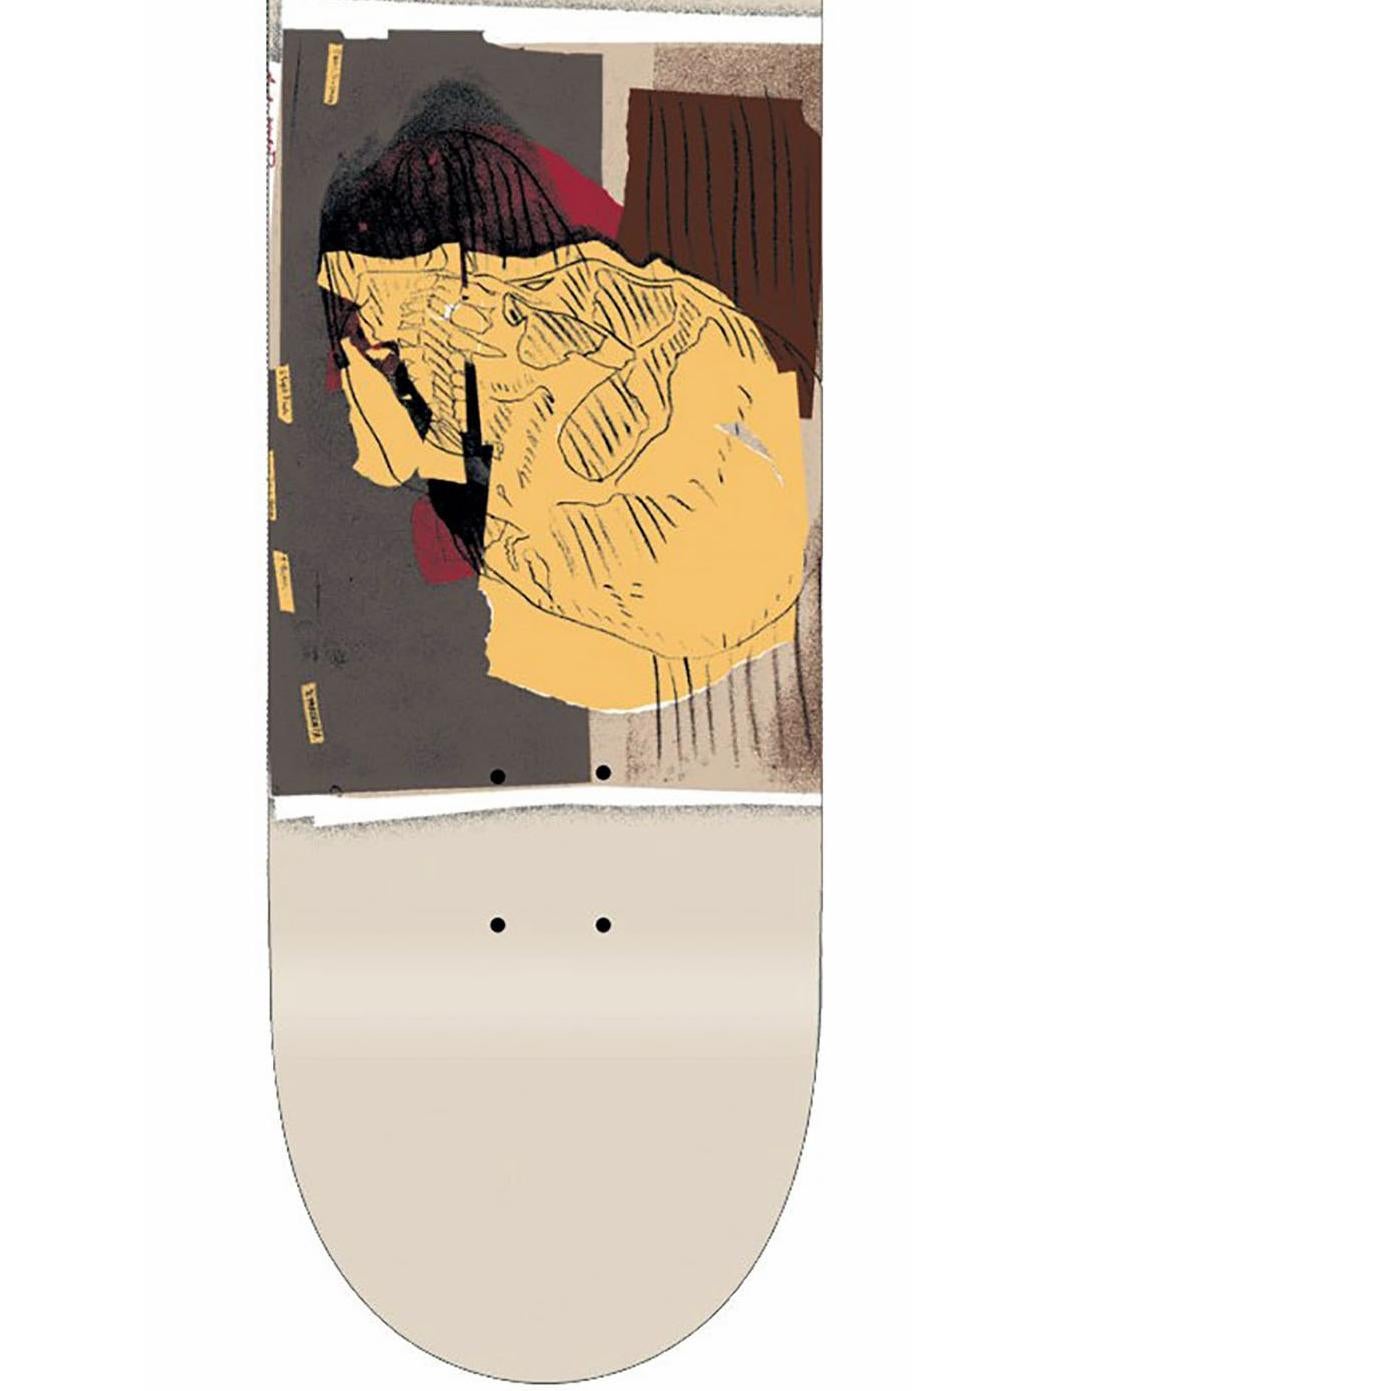 Warhol Skull Skateboard Deck - Pop Art Print by (after) Andy Warhol